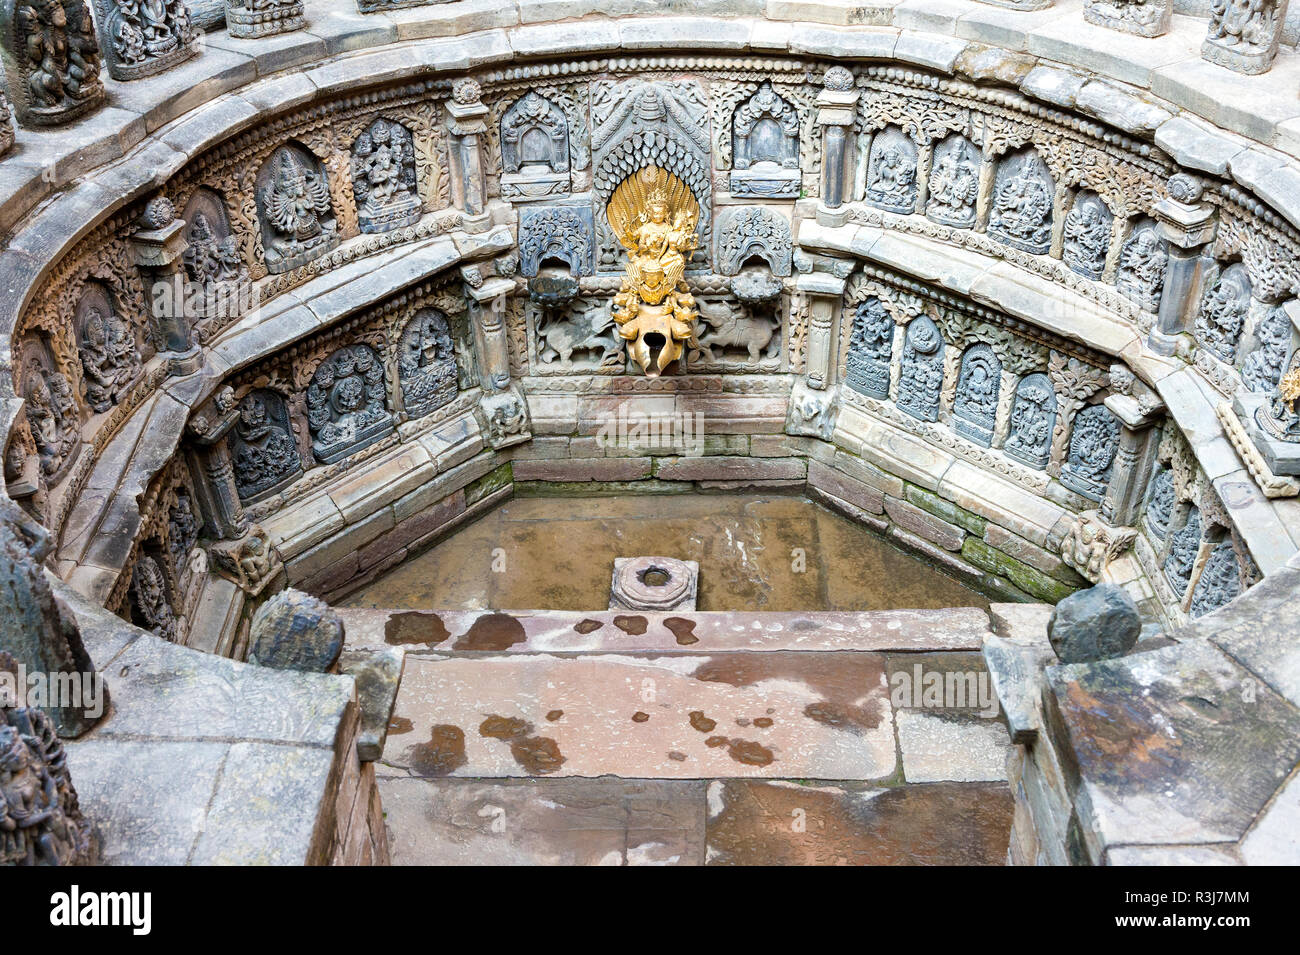 Bassin de baignade rituelle, Sundari Chowk, Palais Royal de Hanuman Dhoka, Patan Durbar Square, site du patrimoine mondial de l'UNESCO Banque D'Images